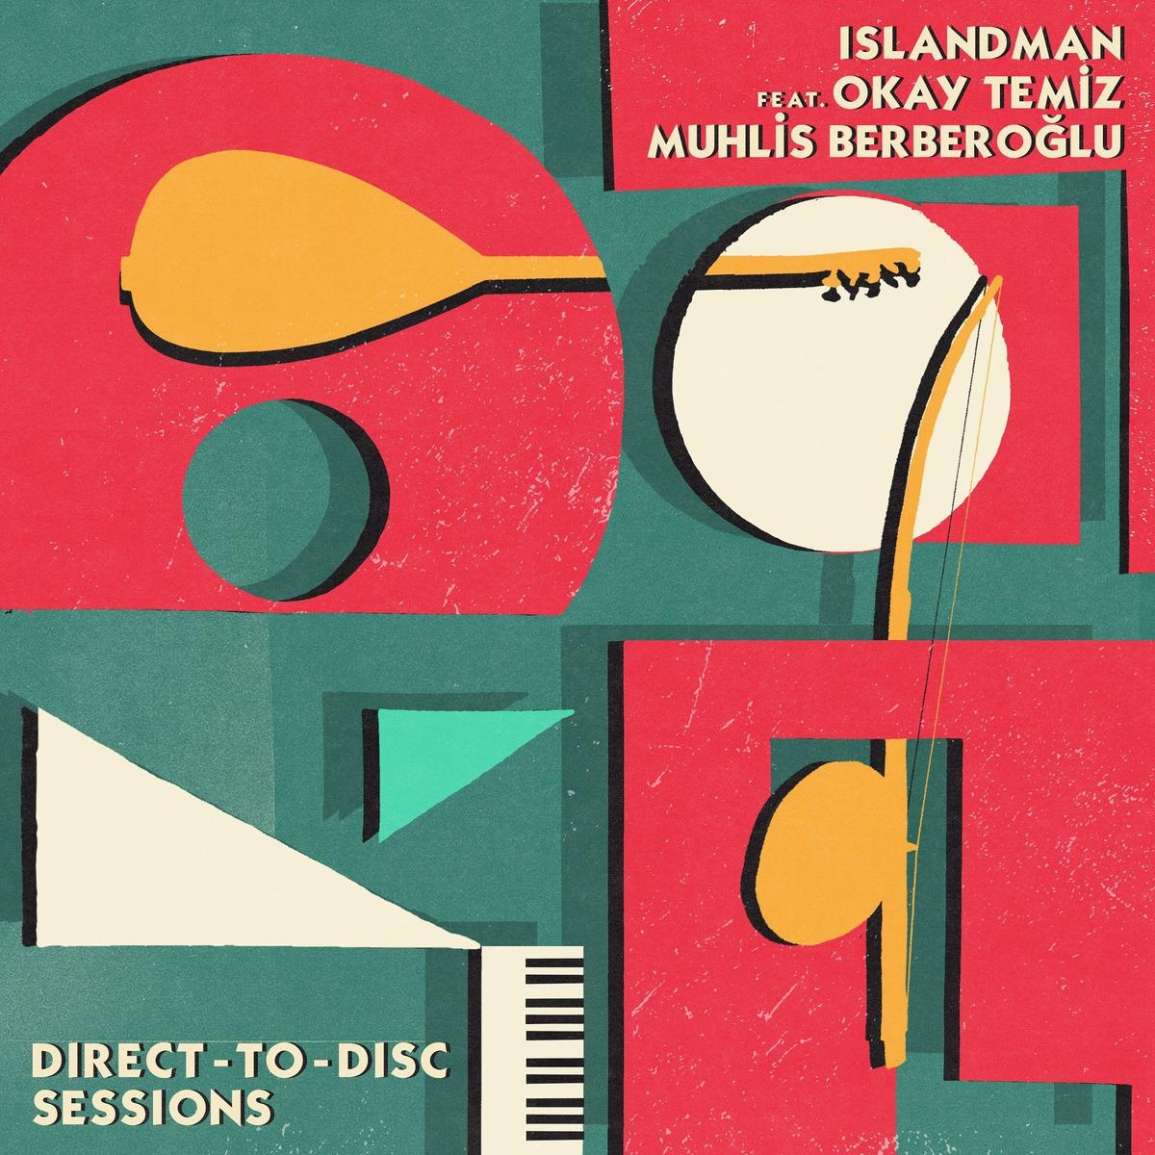 Hörenswert: Islandman feat. Okay Temiz & Muhlis Berberoglu - “Direct-To-Disc Sessions”